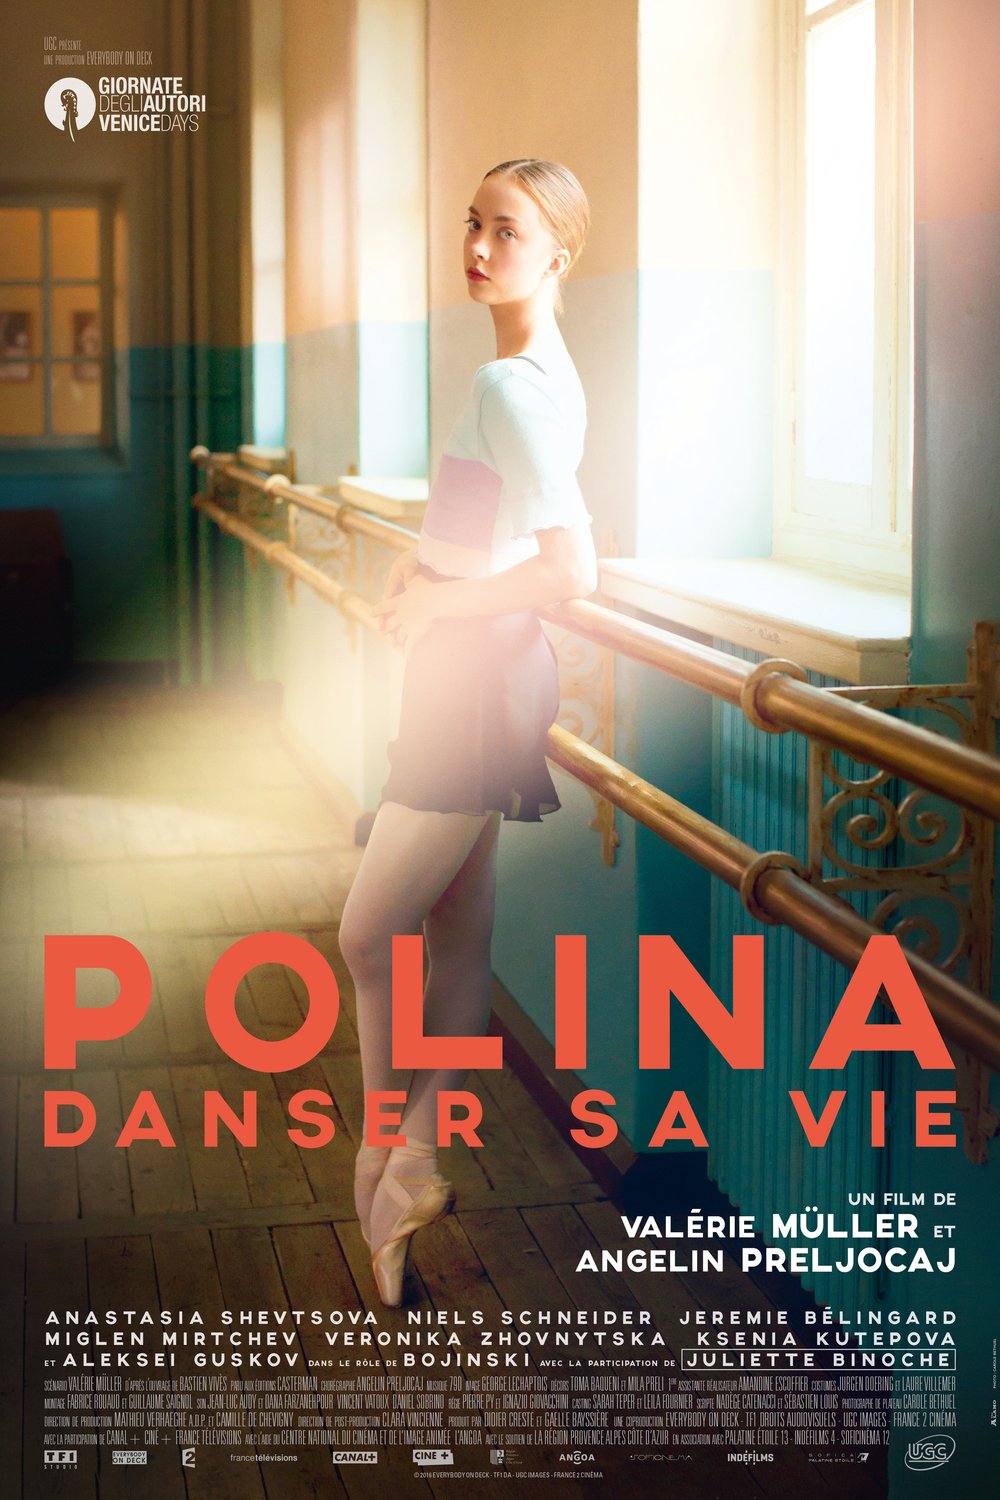 Poster of the movie Polina, danser sa vie